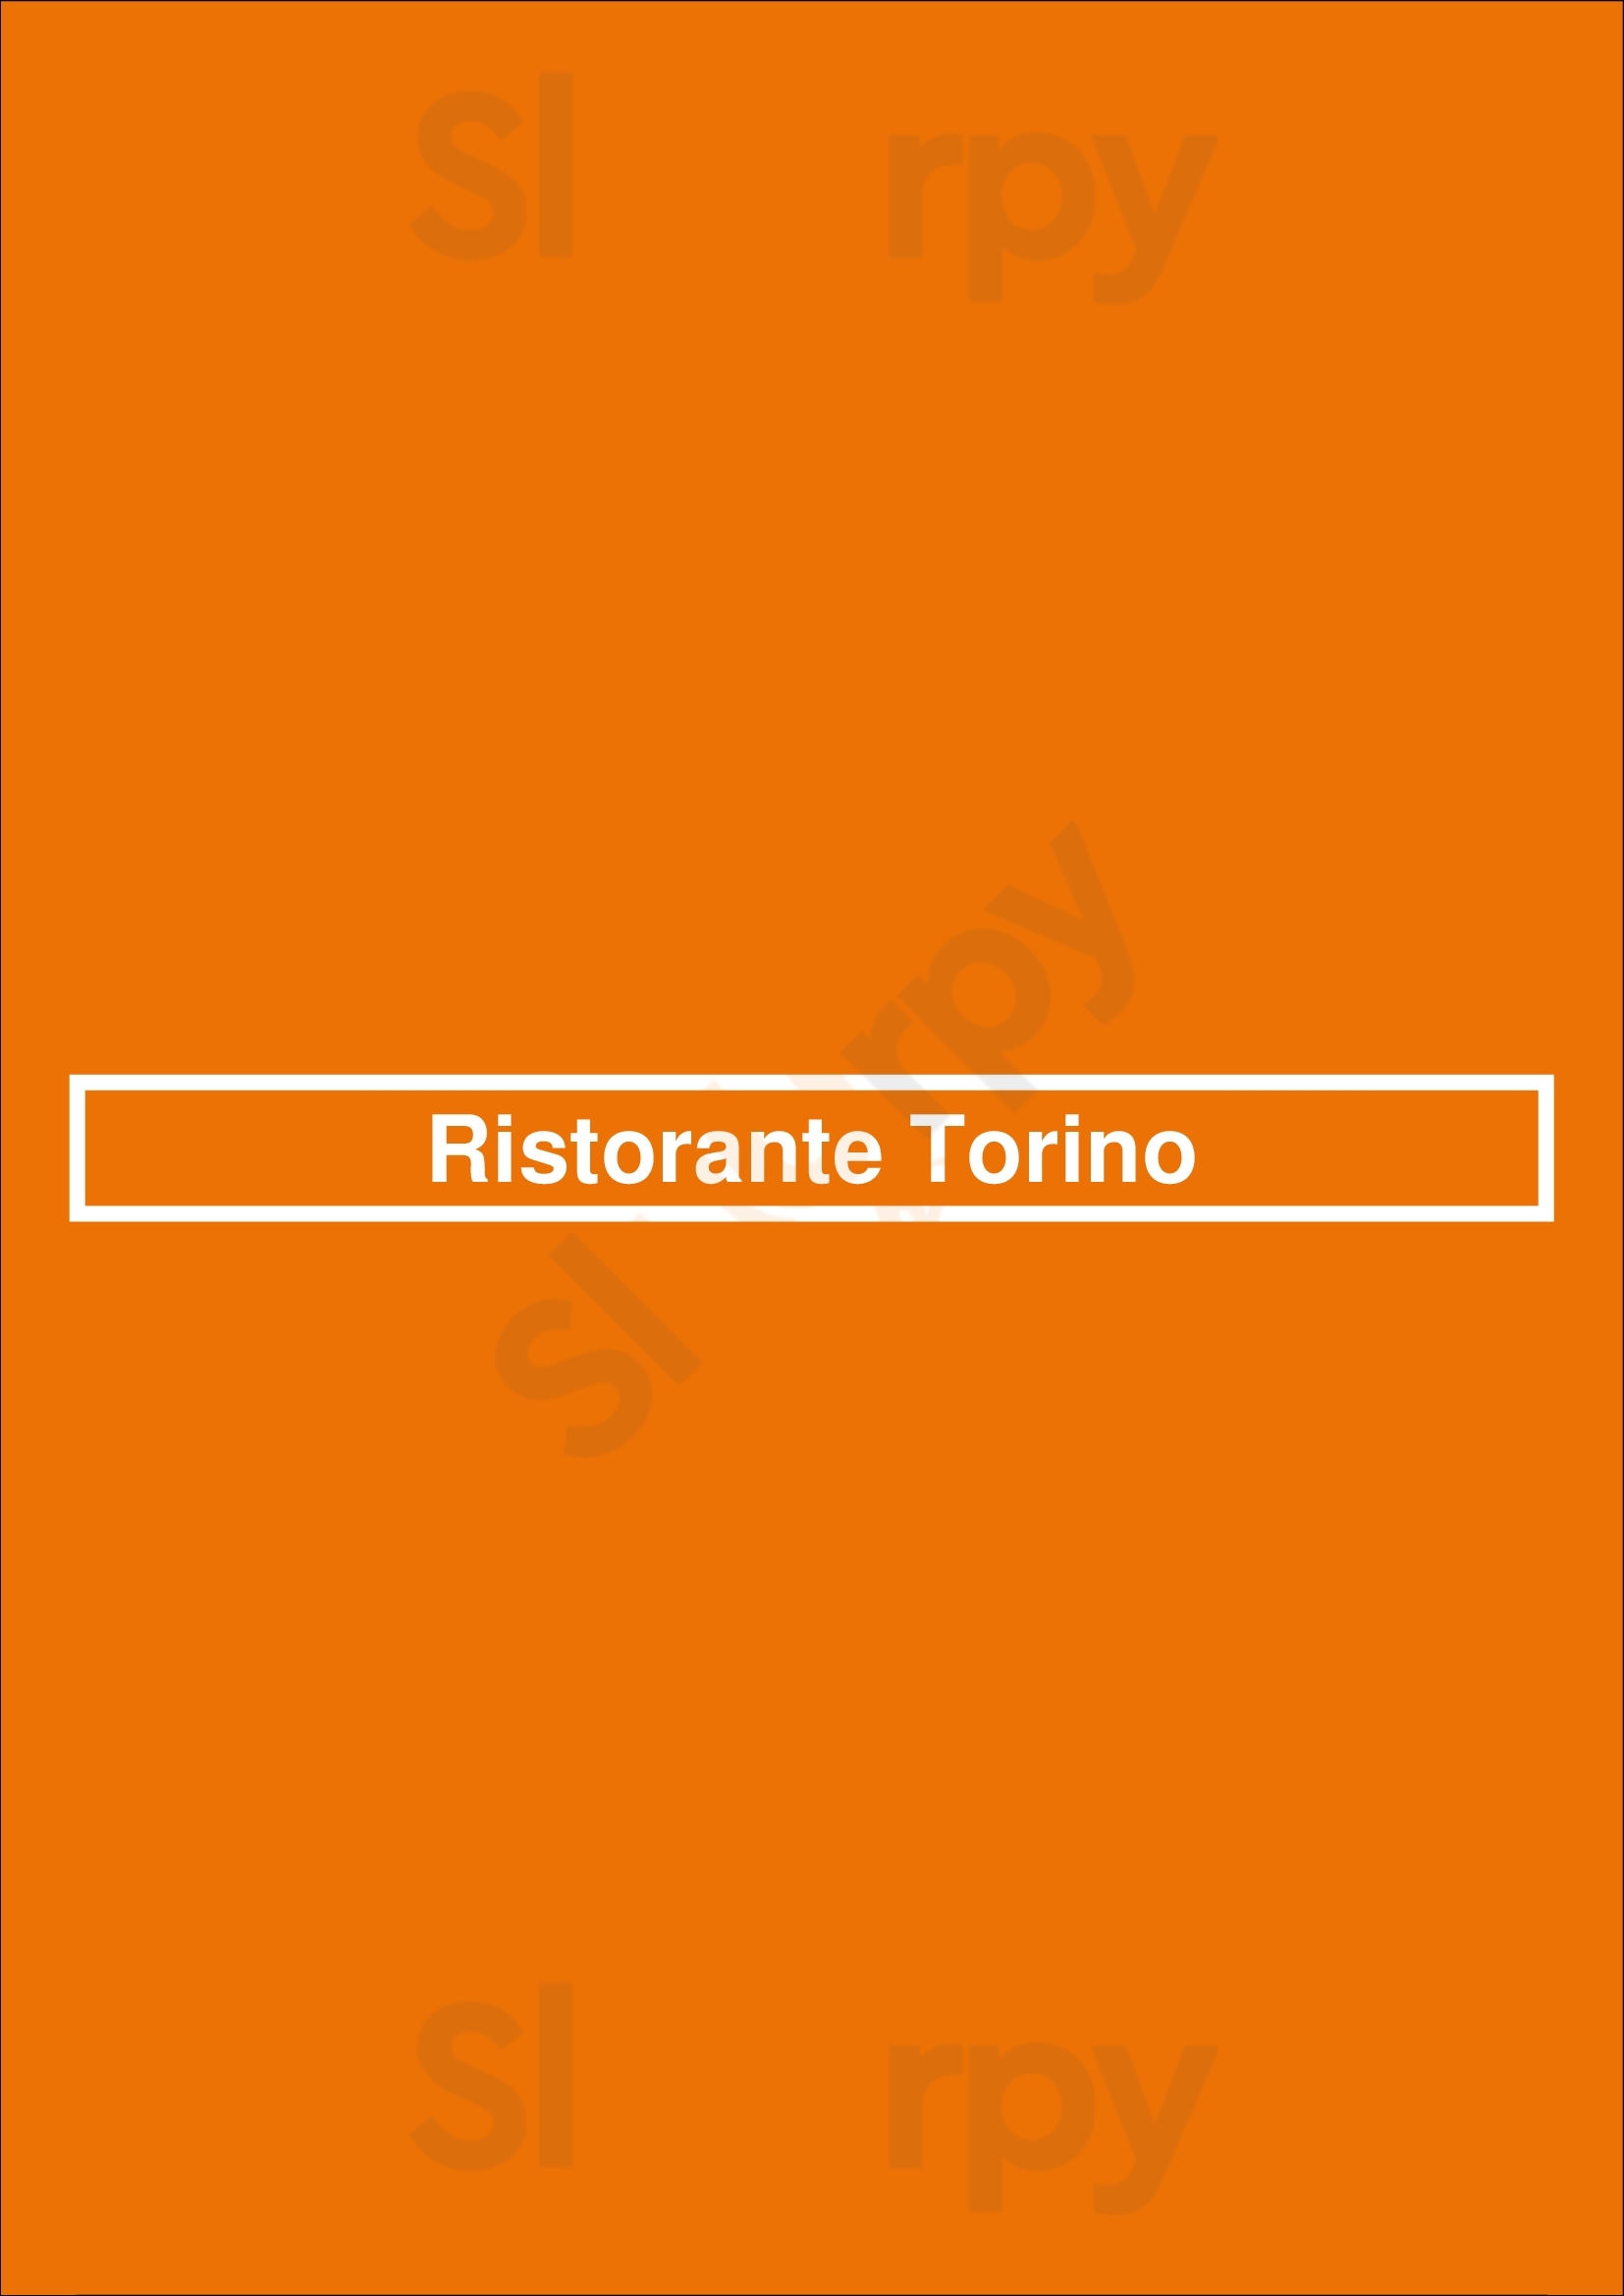 Ristorante Torino Rotterdam Menu - 1